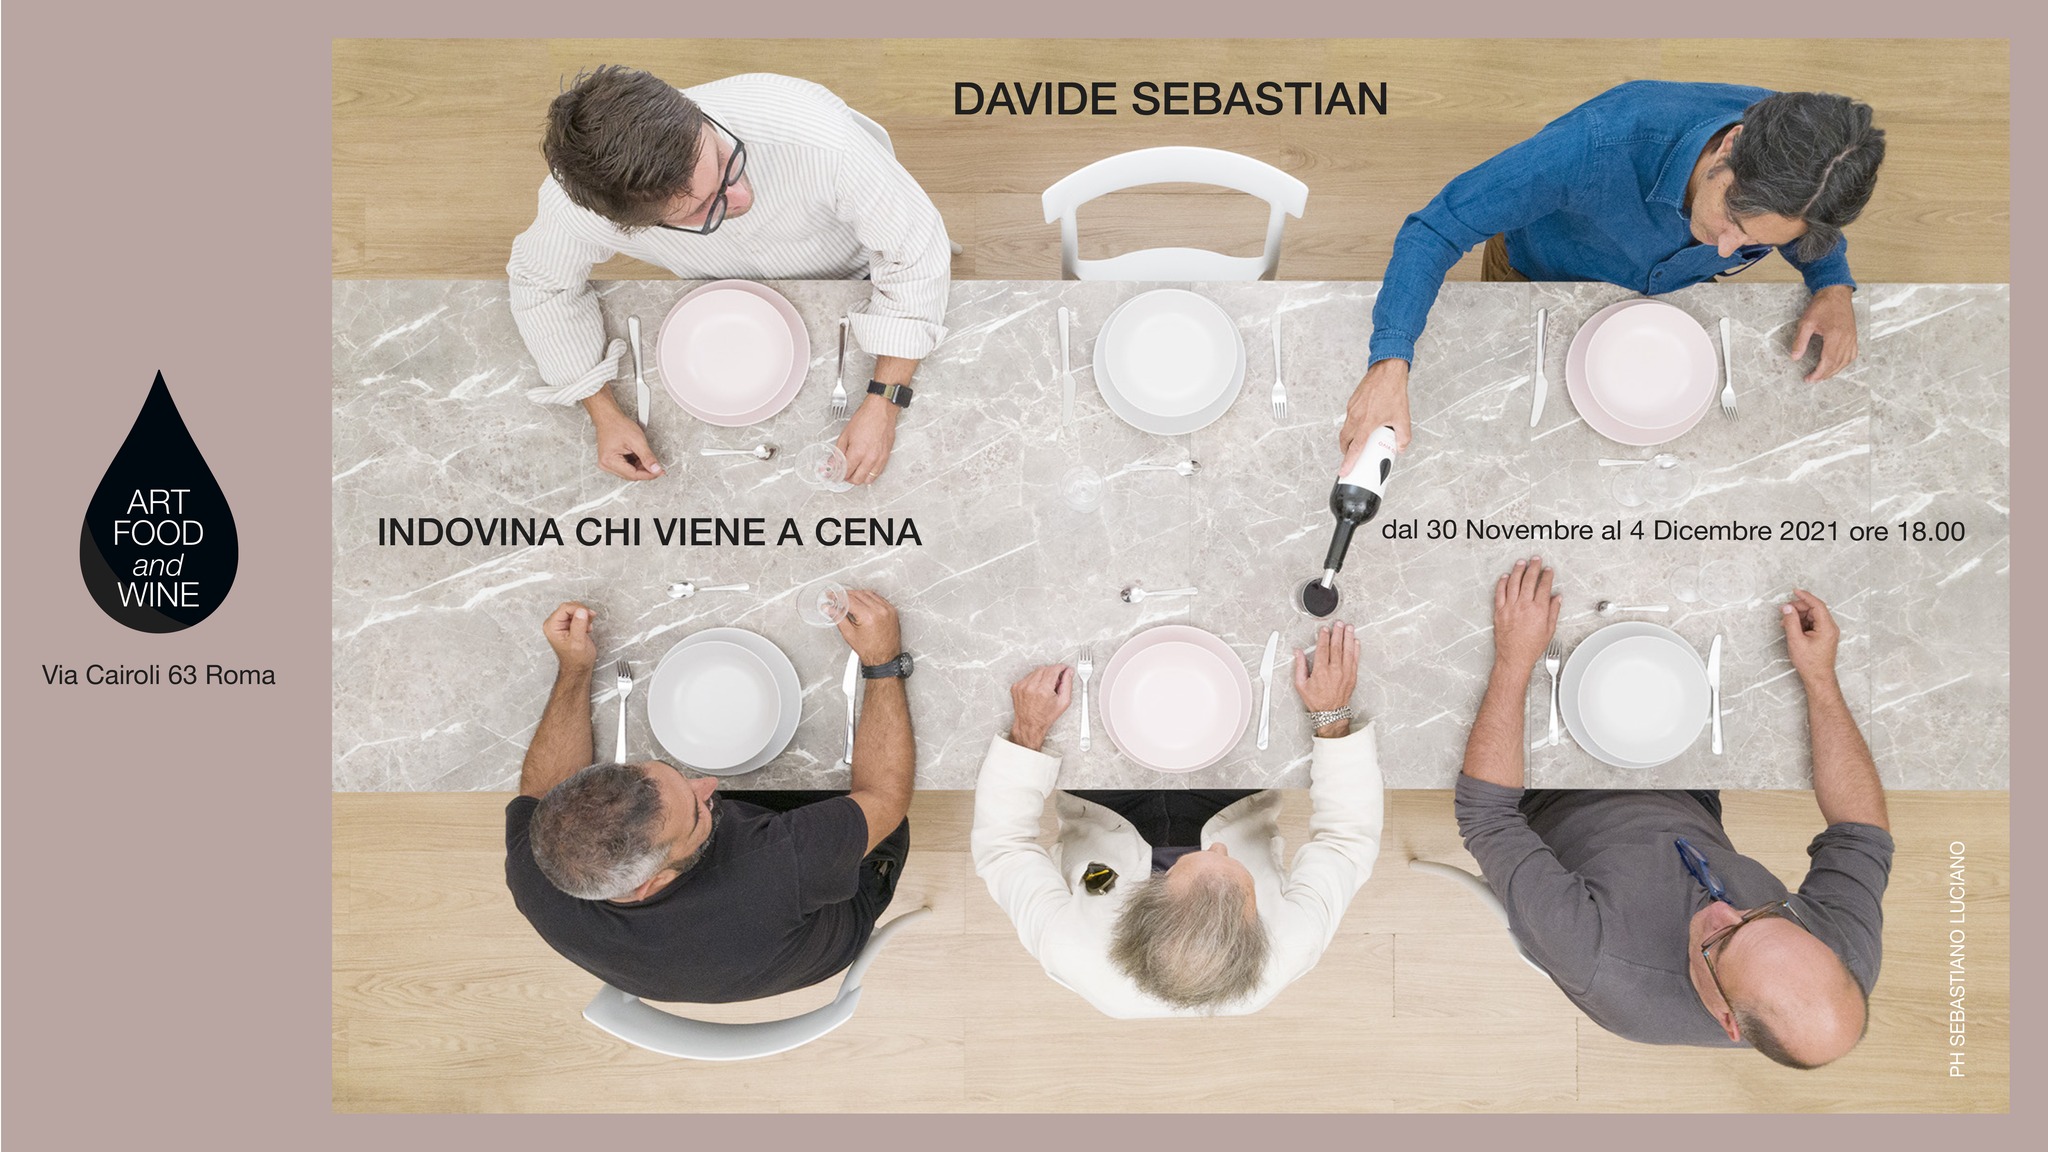 Indovina chi viene a cena - Davide Sebastian